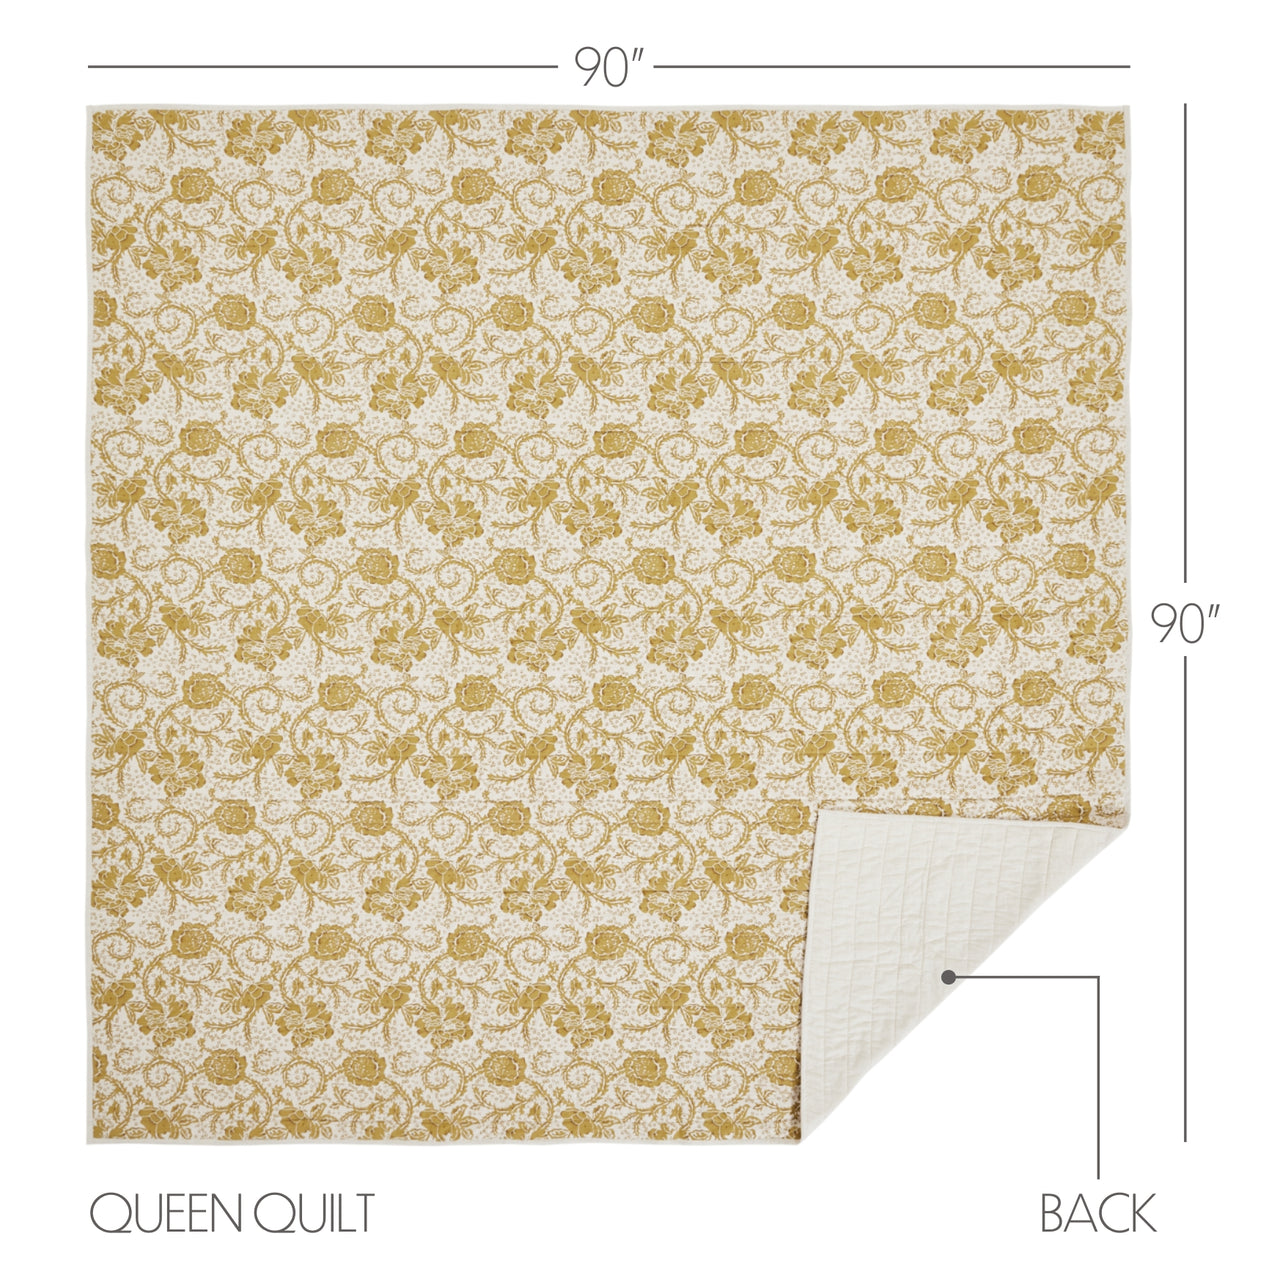 Dorset Gold Floral Queen Quilt 90Wx90L VHC Brands